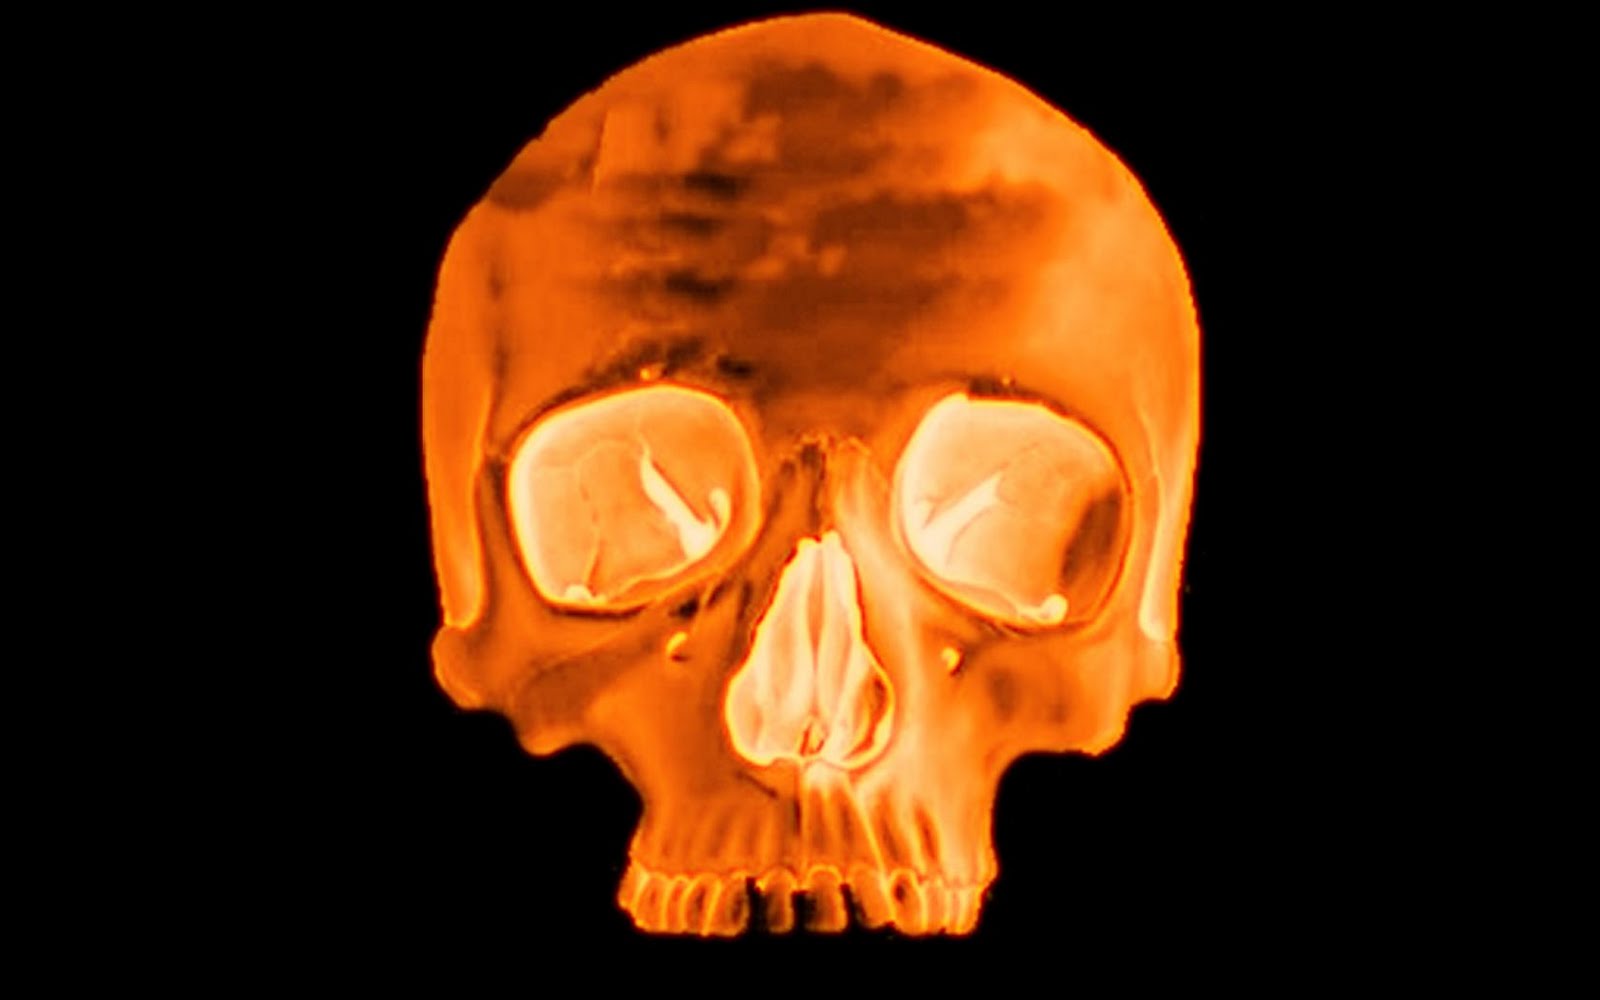 http://4.bp.blogspot.com/_Ym3du2sG3R4/TFyCWjTHlII/AAAAAAAACt8/Xz9jaAzjuNE/s1600/3D-Fire-Skull.jpg